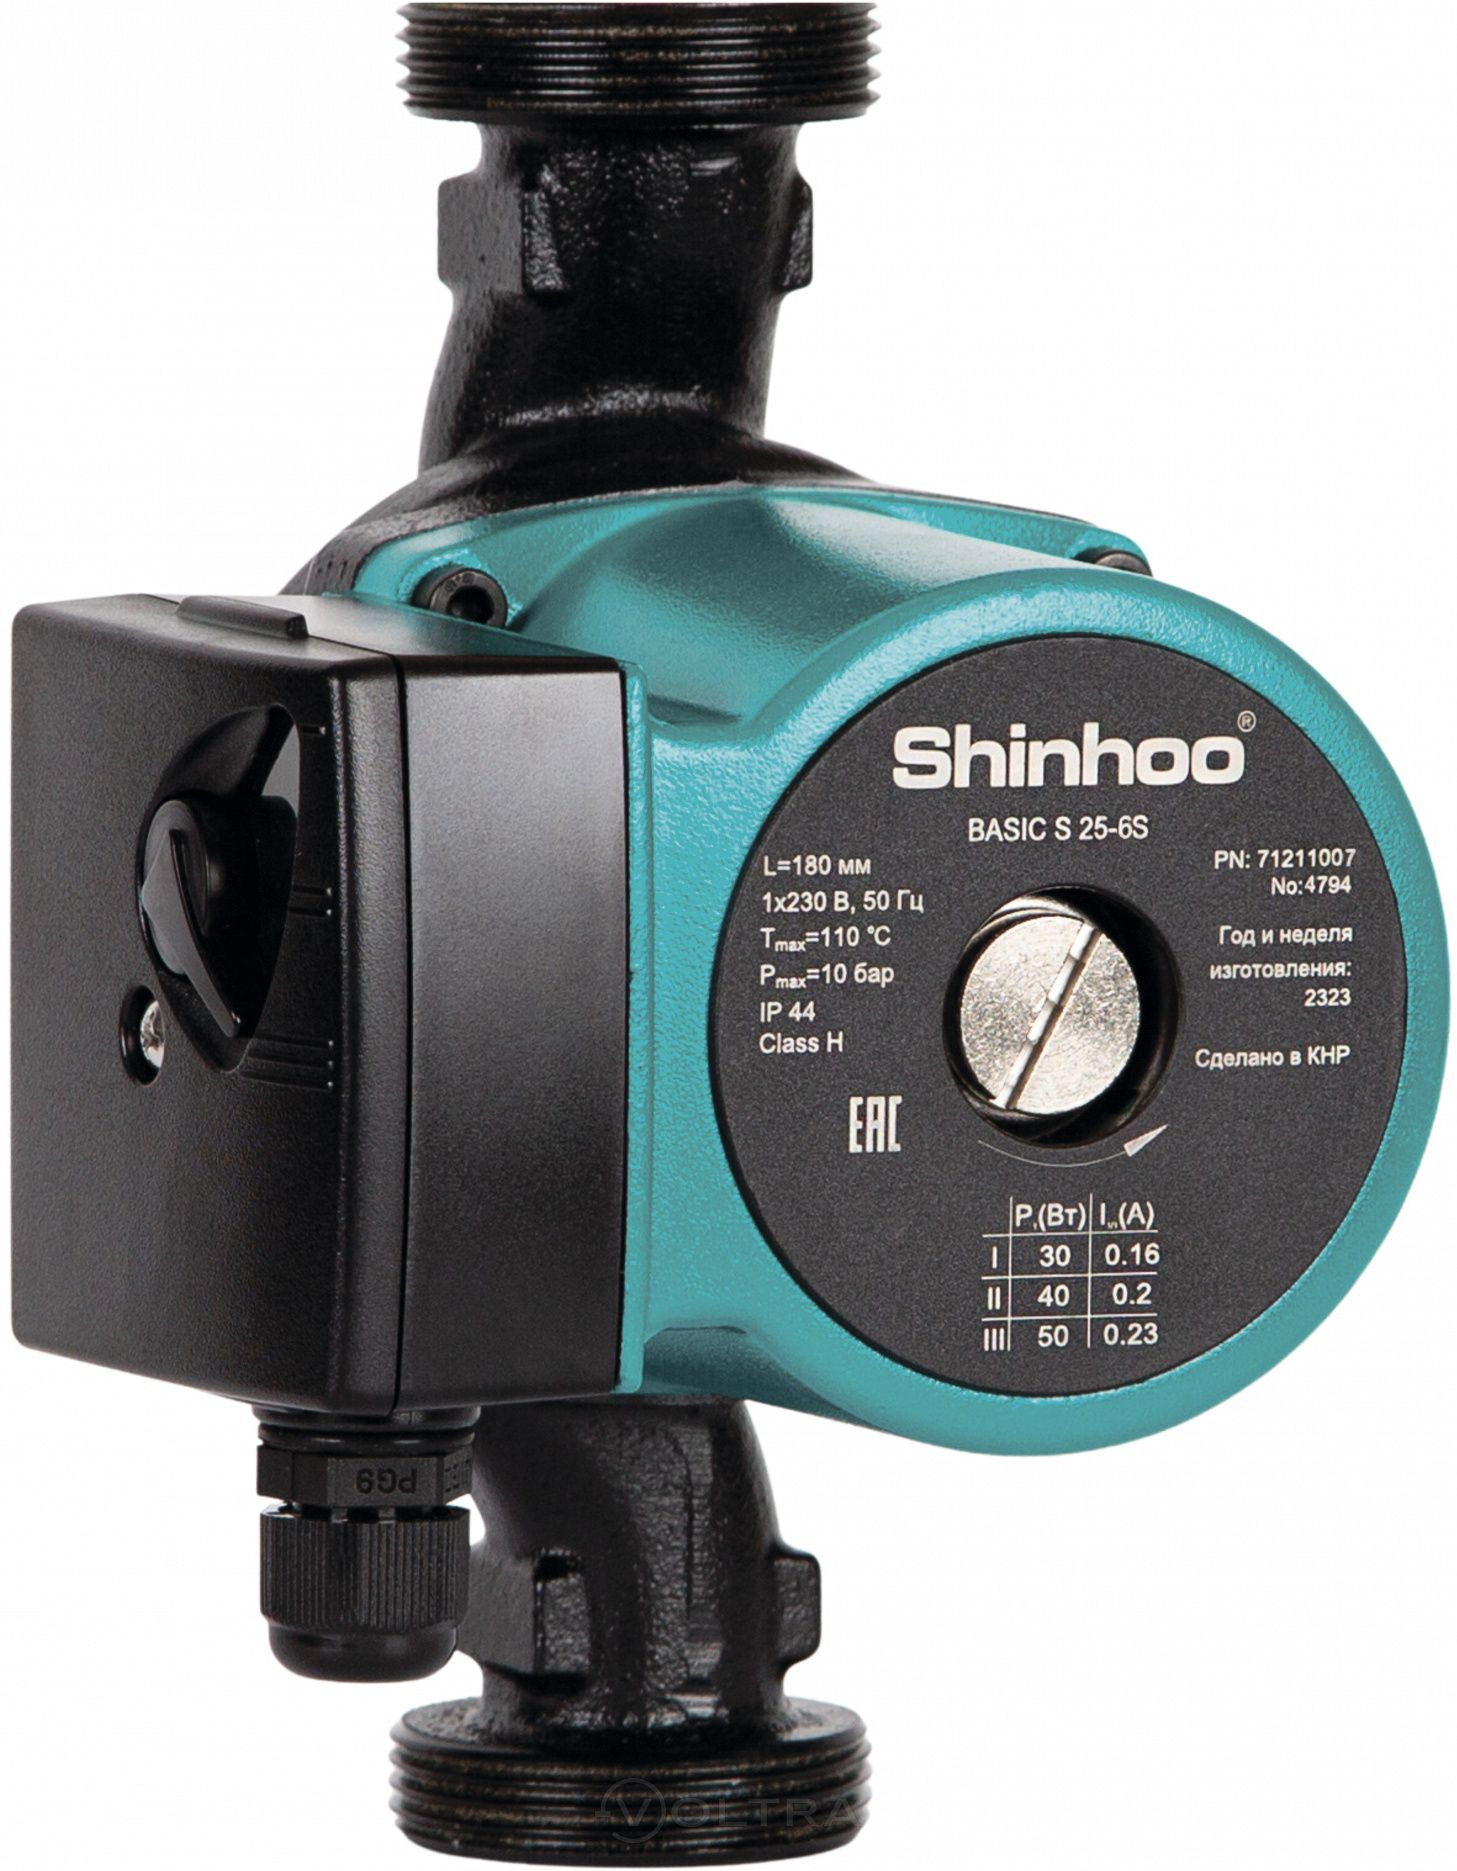 SHINHOO BASIC S 25-4S 180